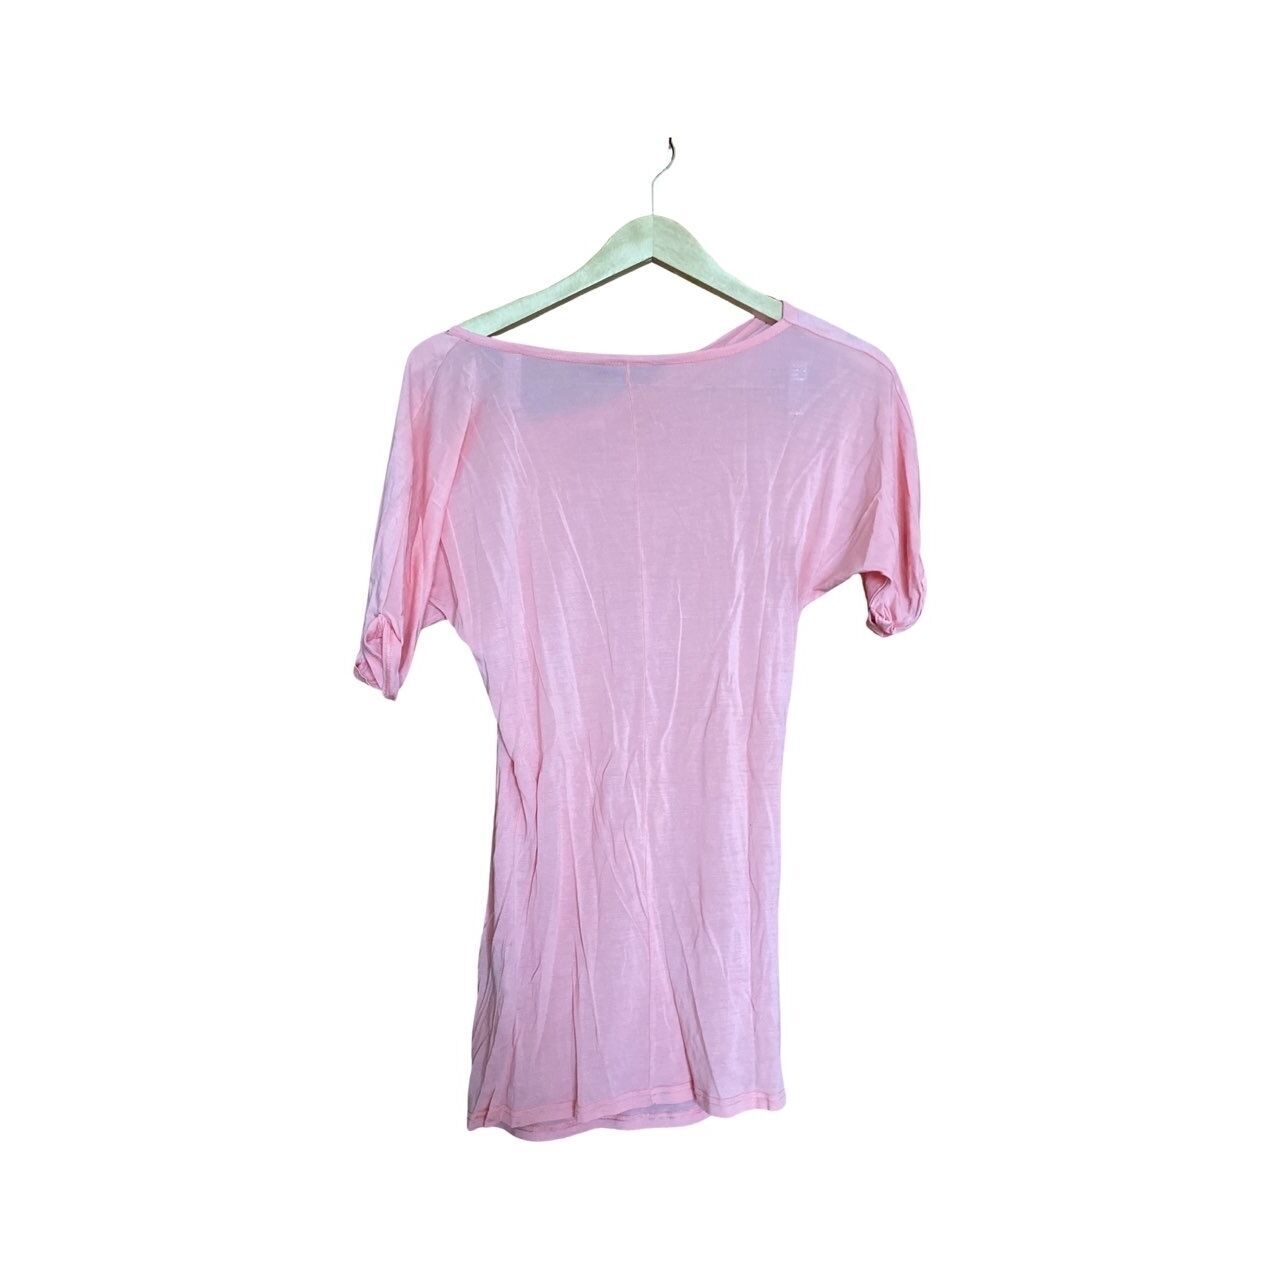 Armani Exchange Dusty Pink Blouse